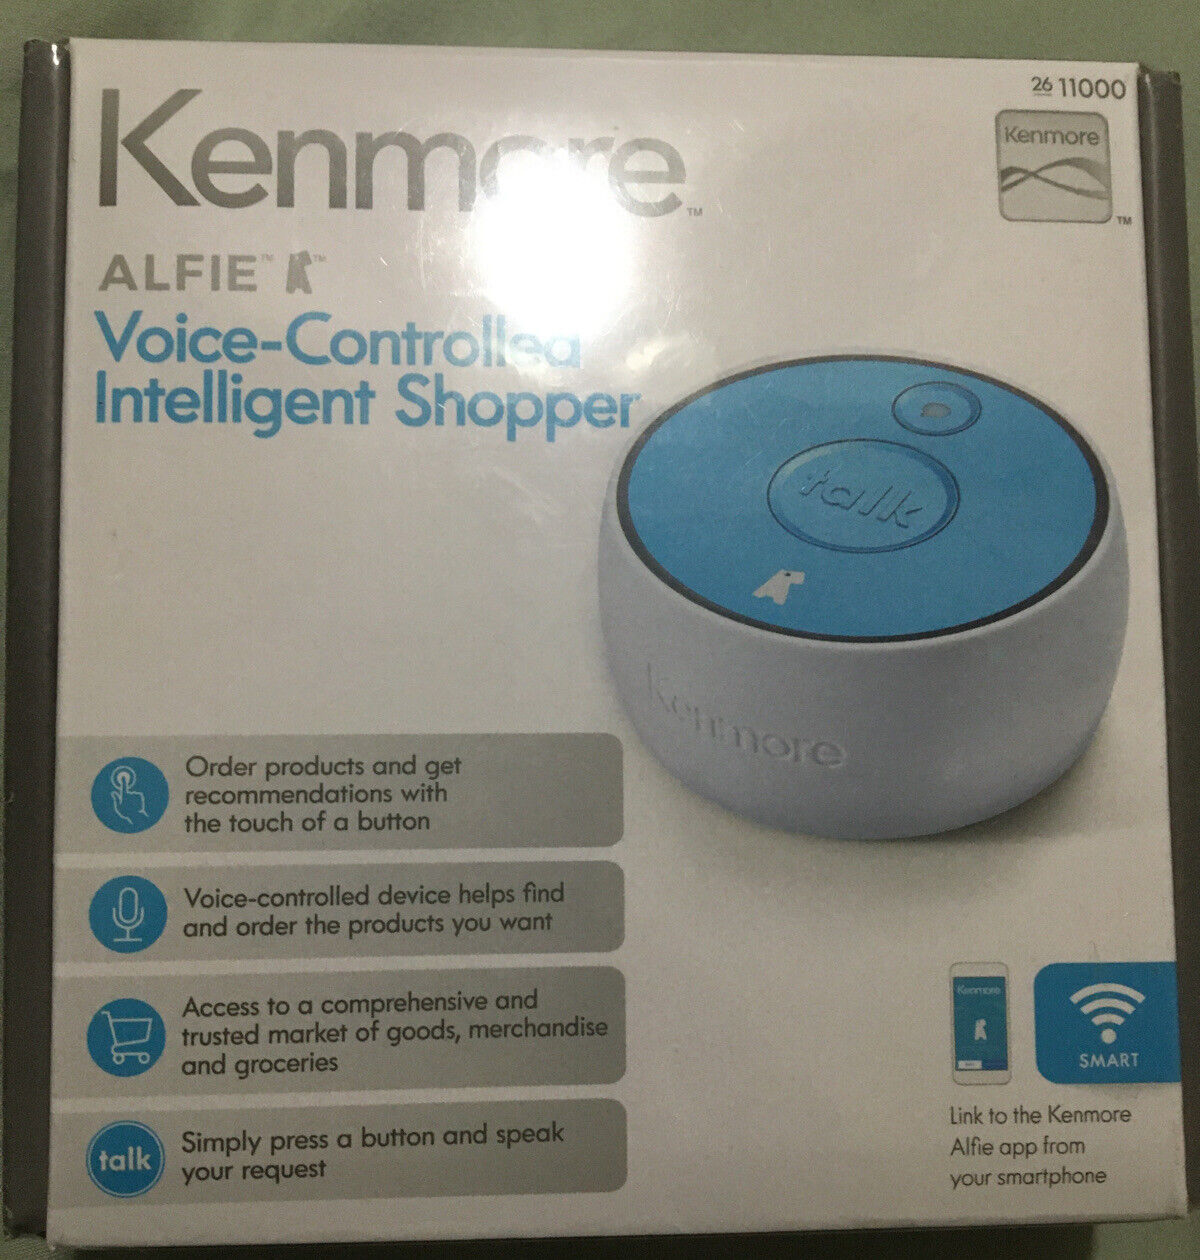 Kenmore Alfie Voice-Controlled Intelligent Shopper 11000 alfiefetch.com 